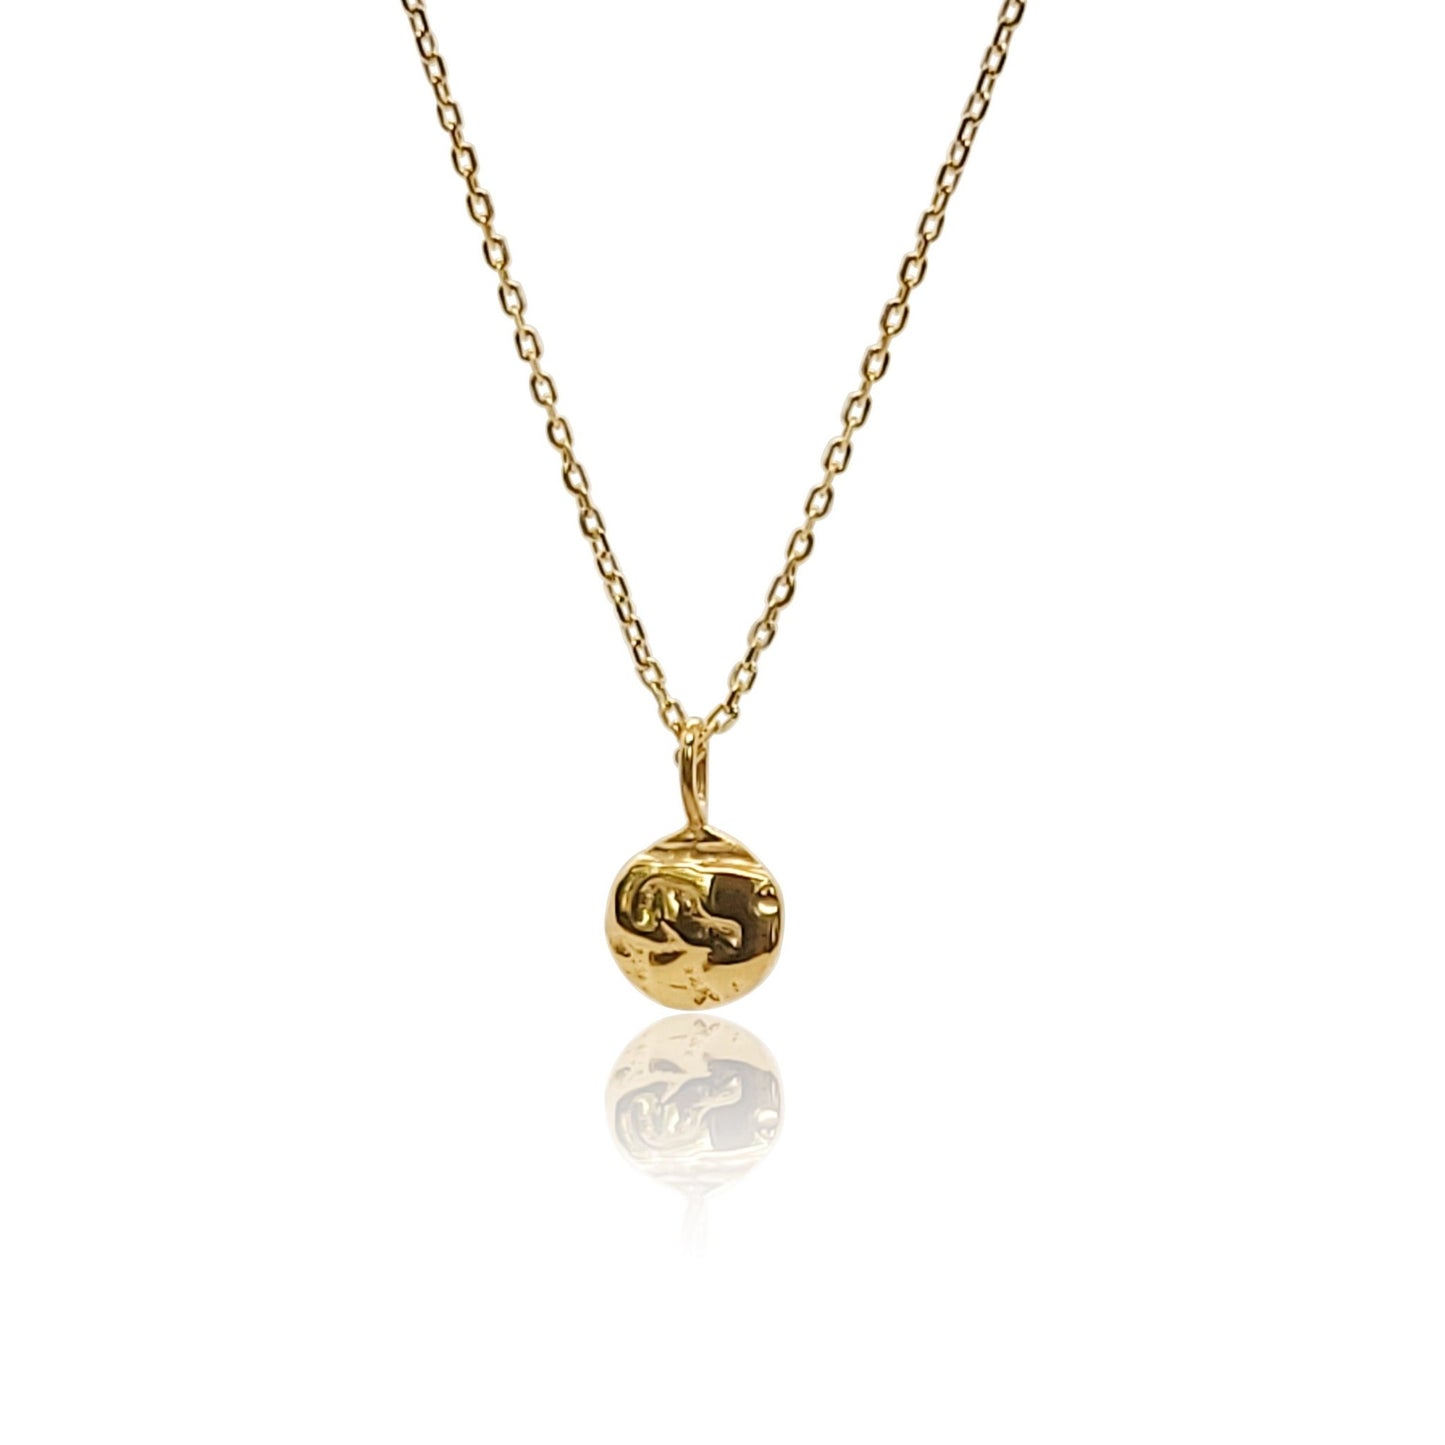 gold vermeil Ayla circle pendant necklace with driftwood texture on elegant minimalist design  